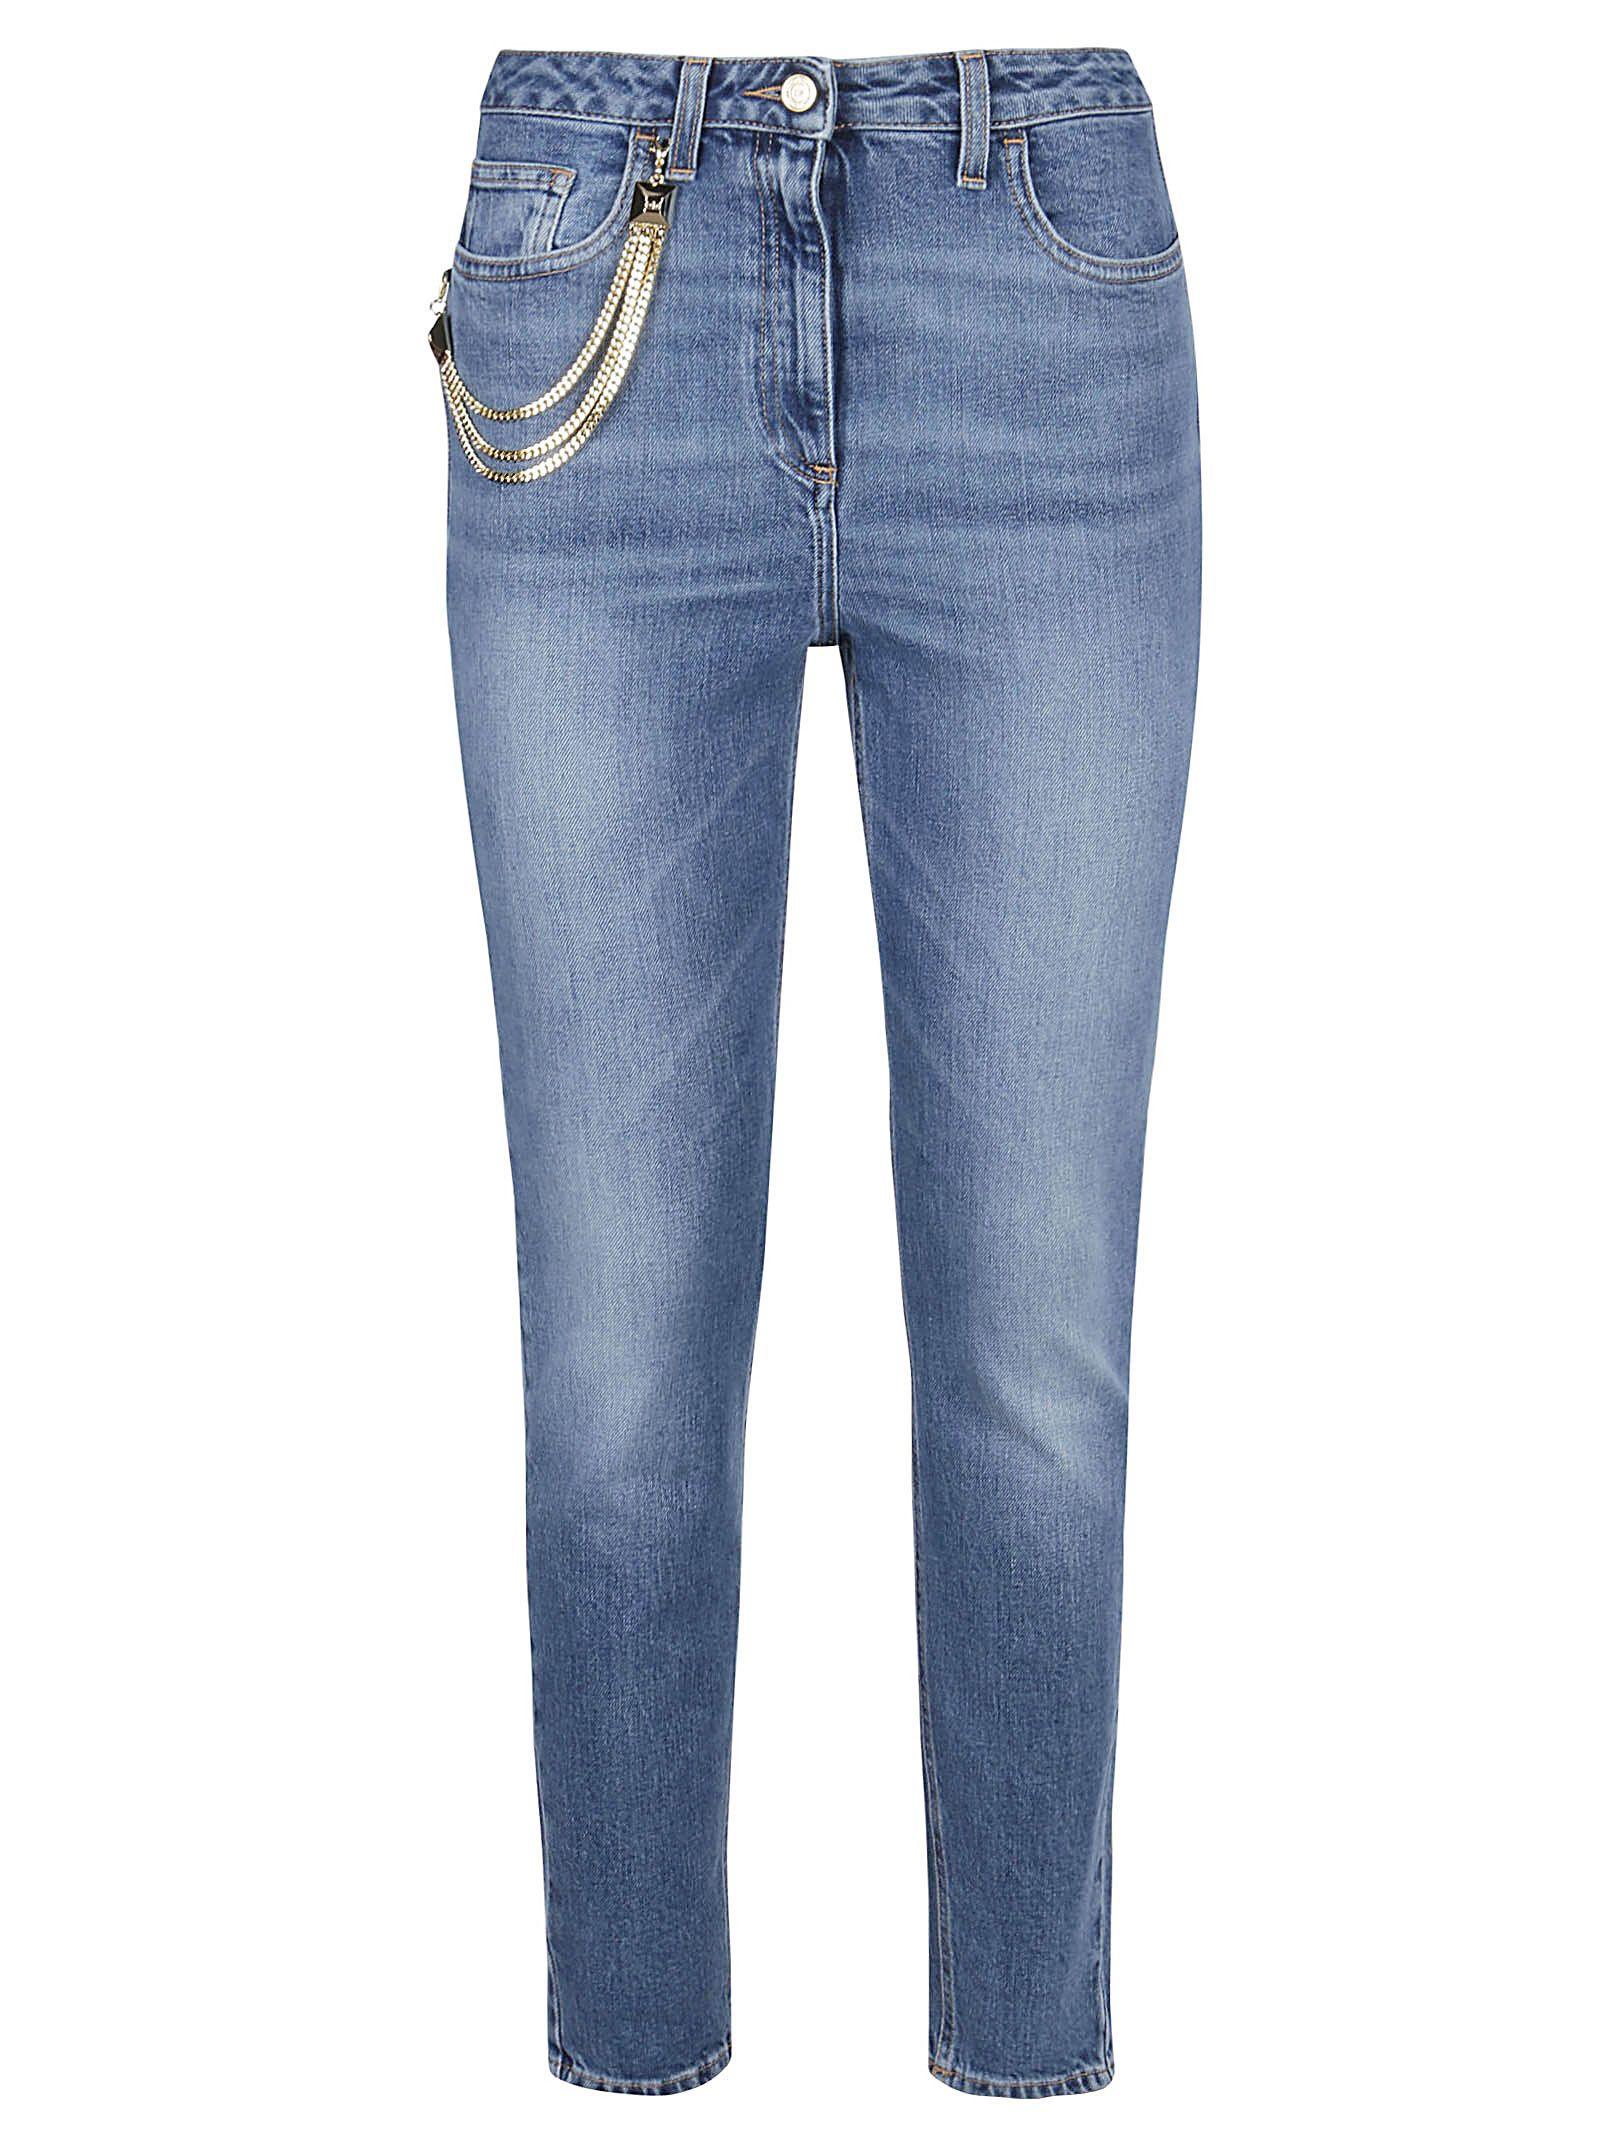 Damen Bekleidung Jeans Röhrenjeans Elisabetta Franchi Denim Andere materialien jeans in Blau 